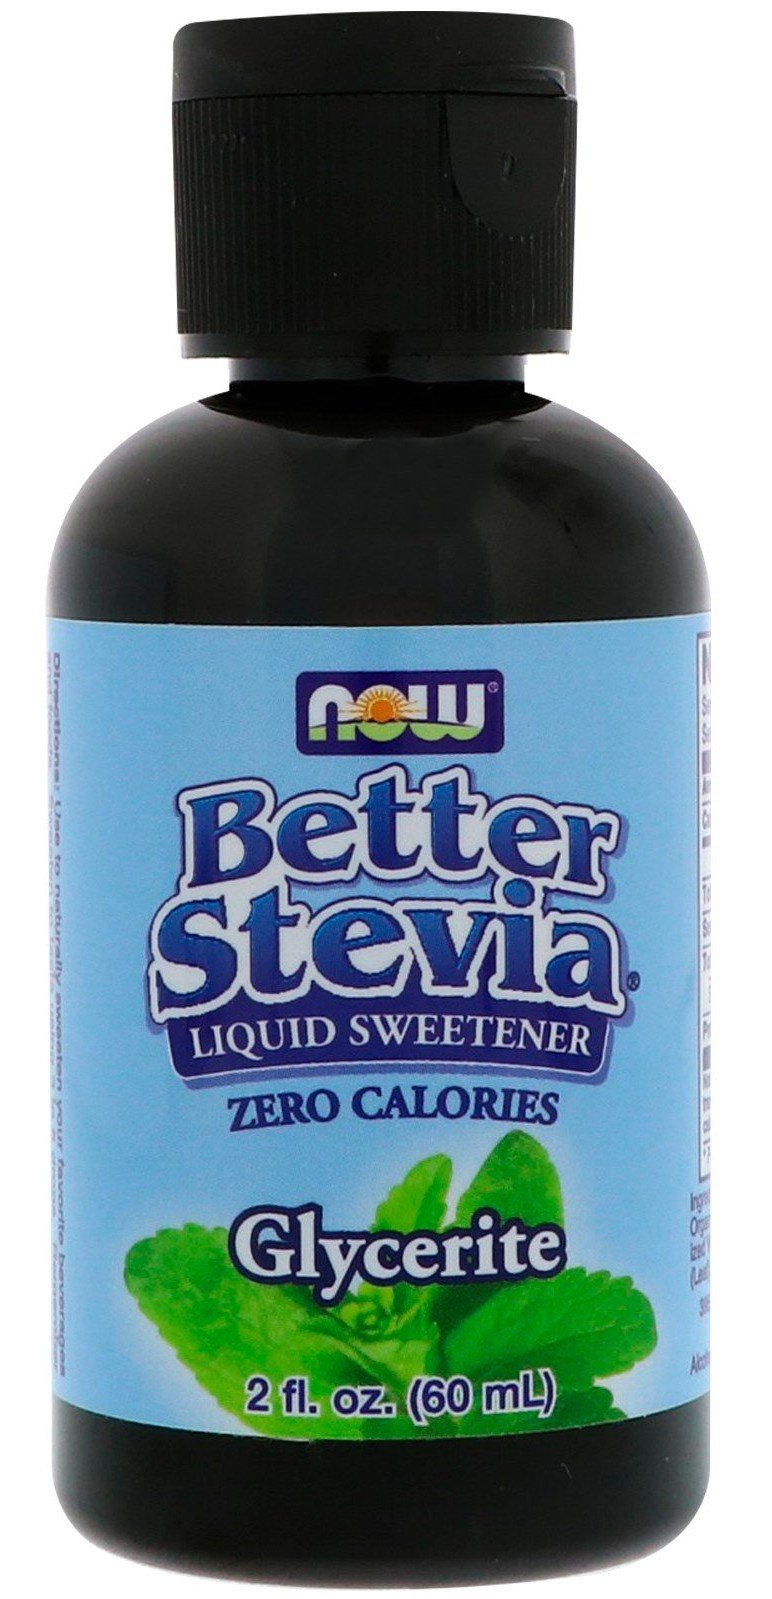 Better Stevia Liquid, 60 ml, Now. Special supplements. 